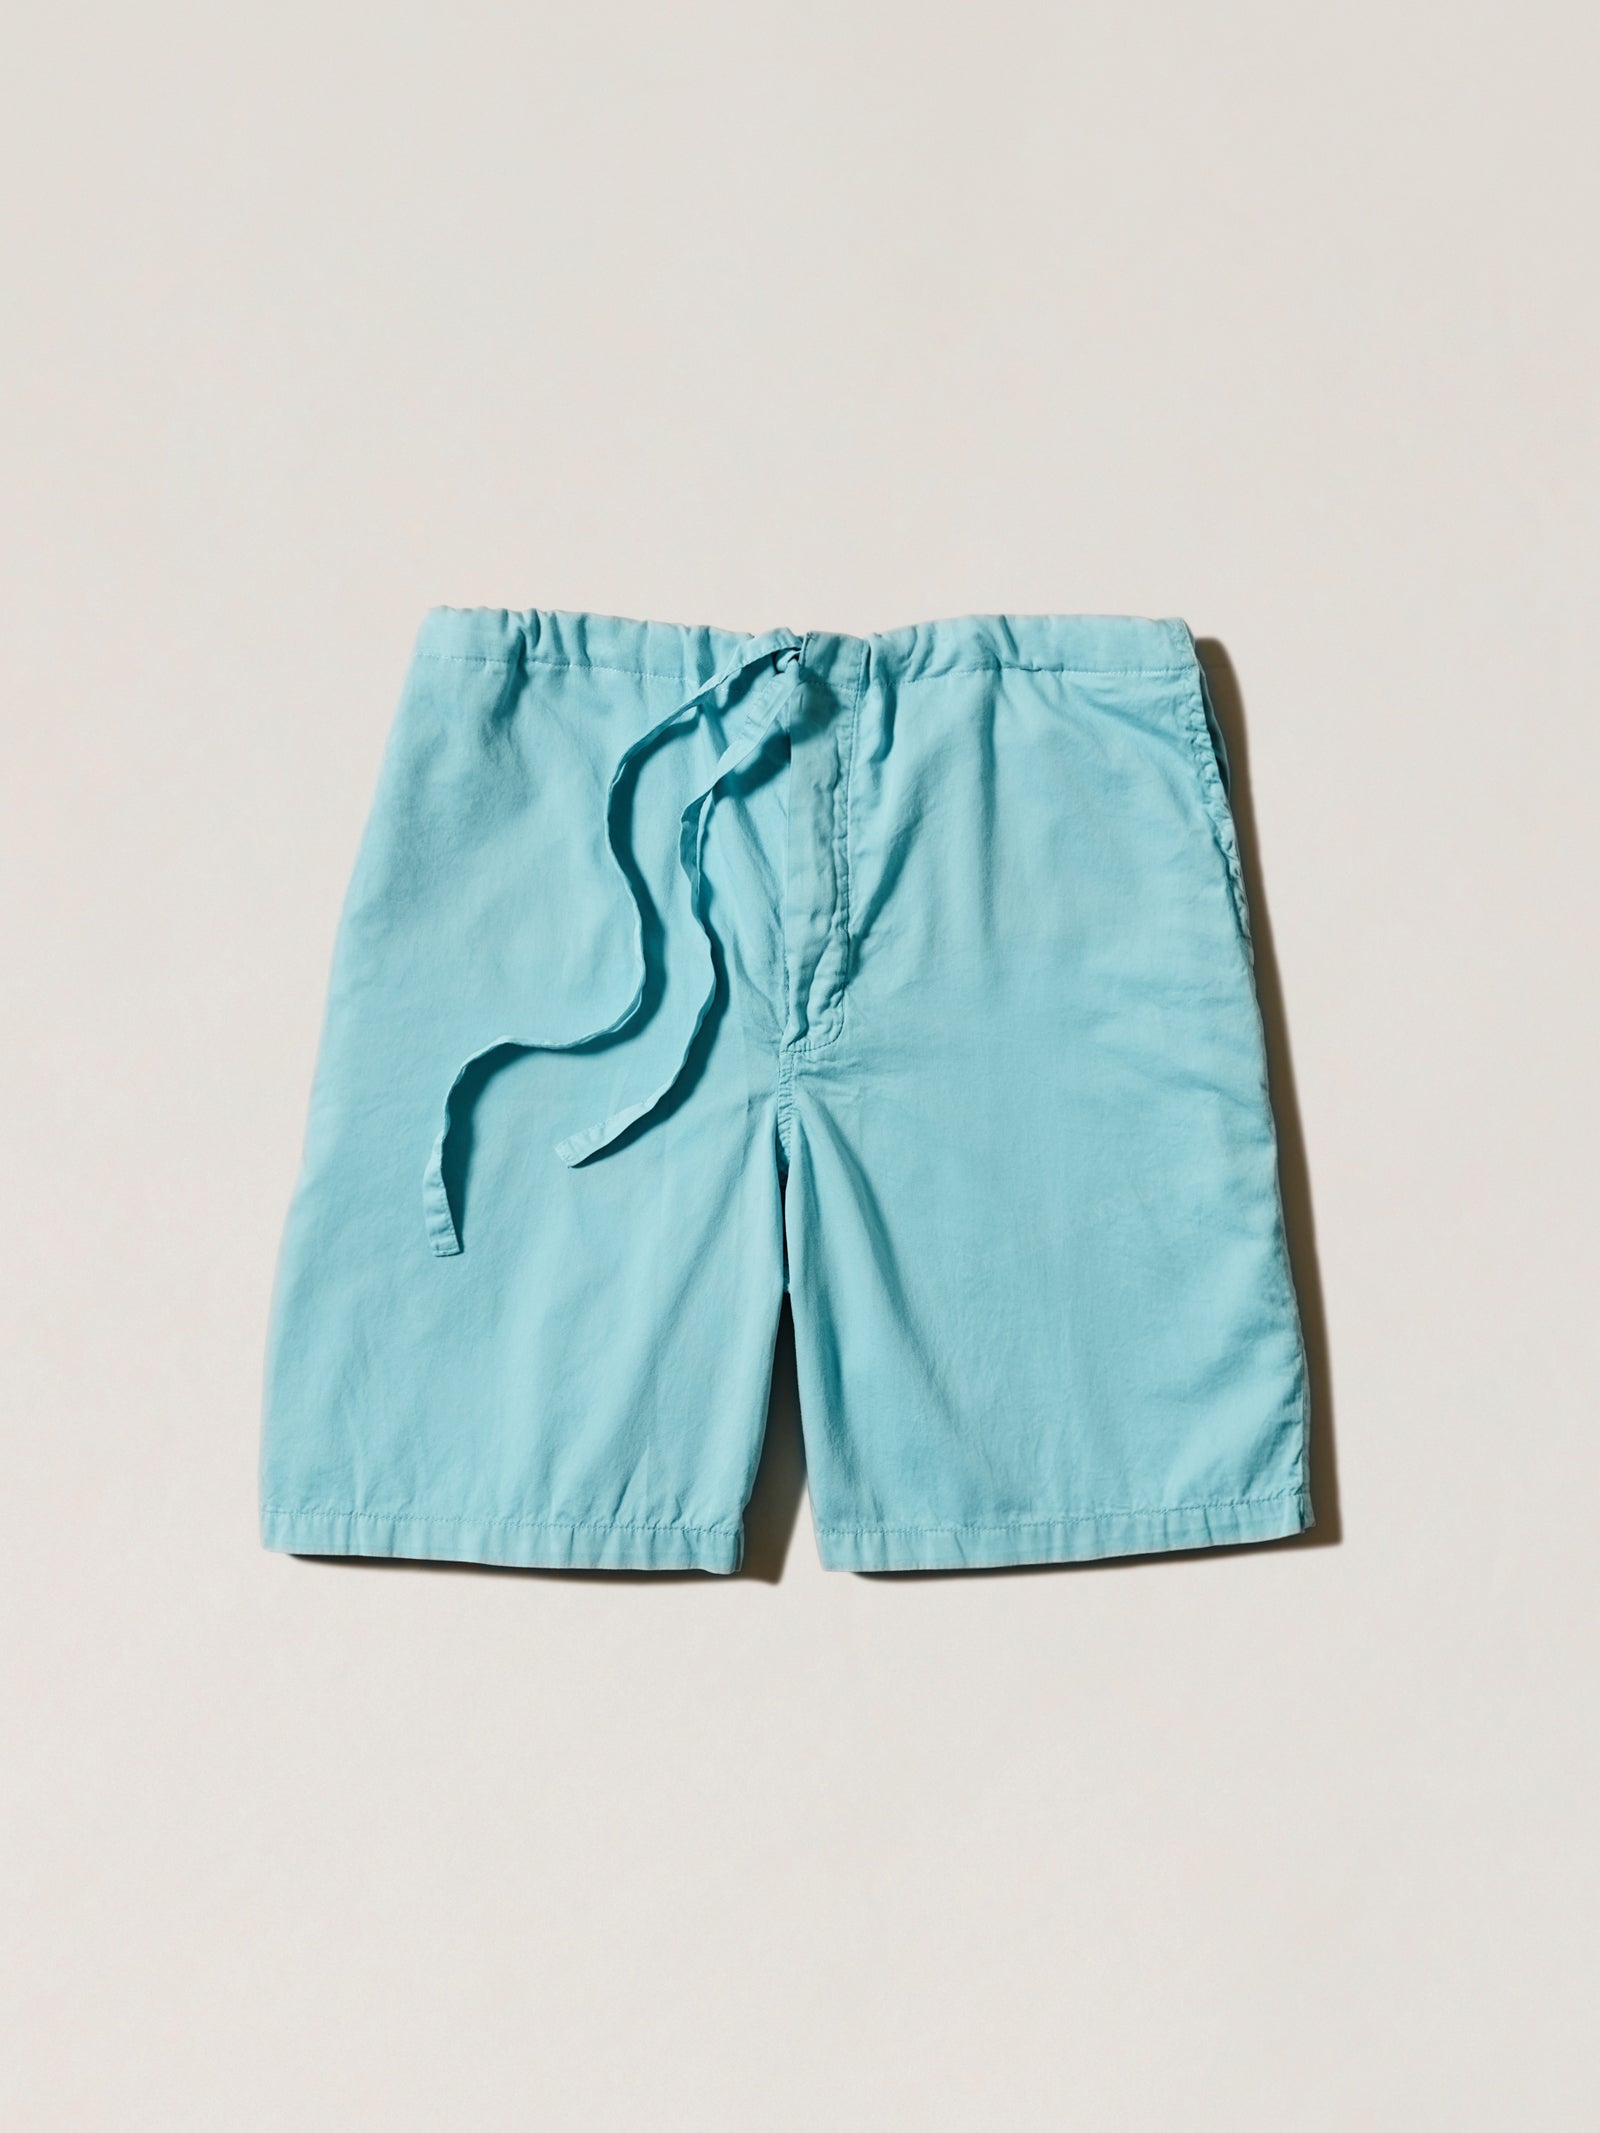 100% cotton pyjama shorts, blue drawstring waist lounge shorts